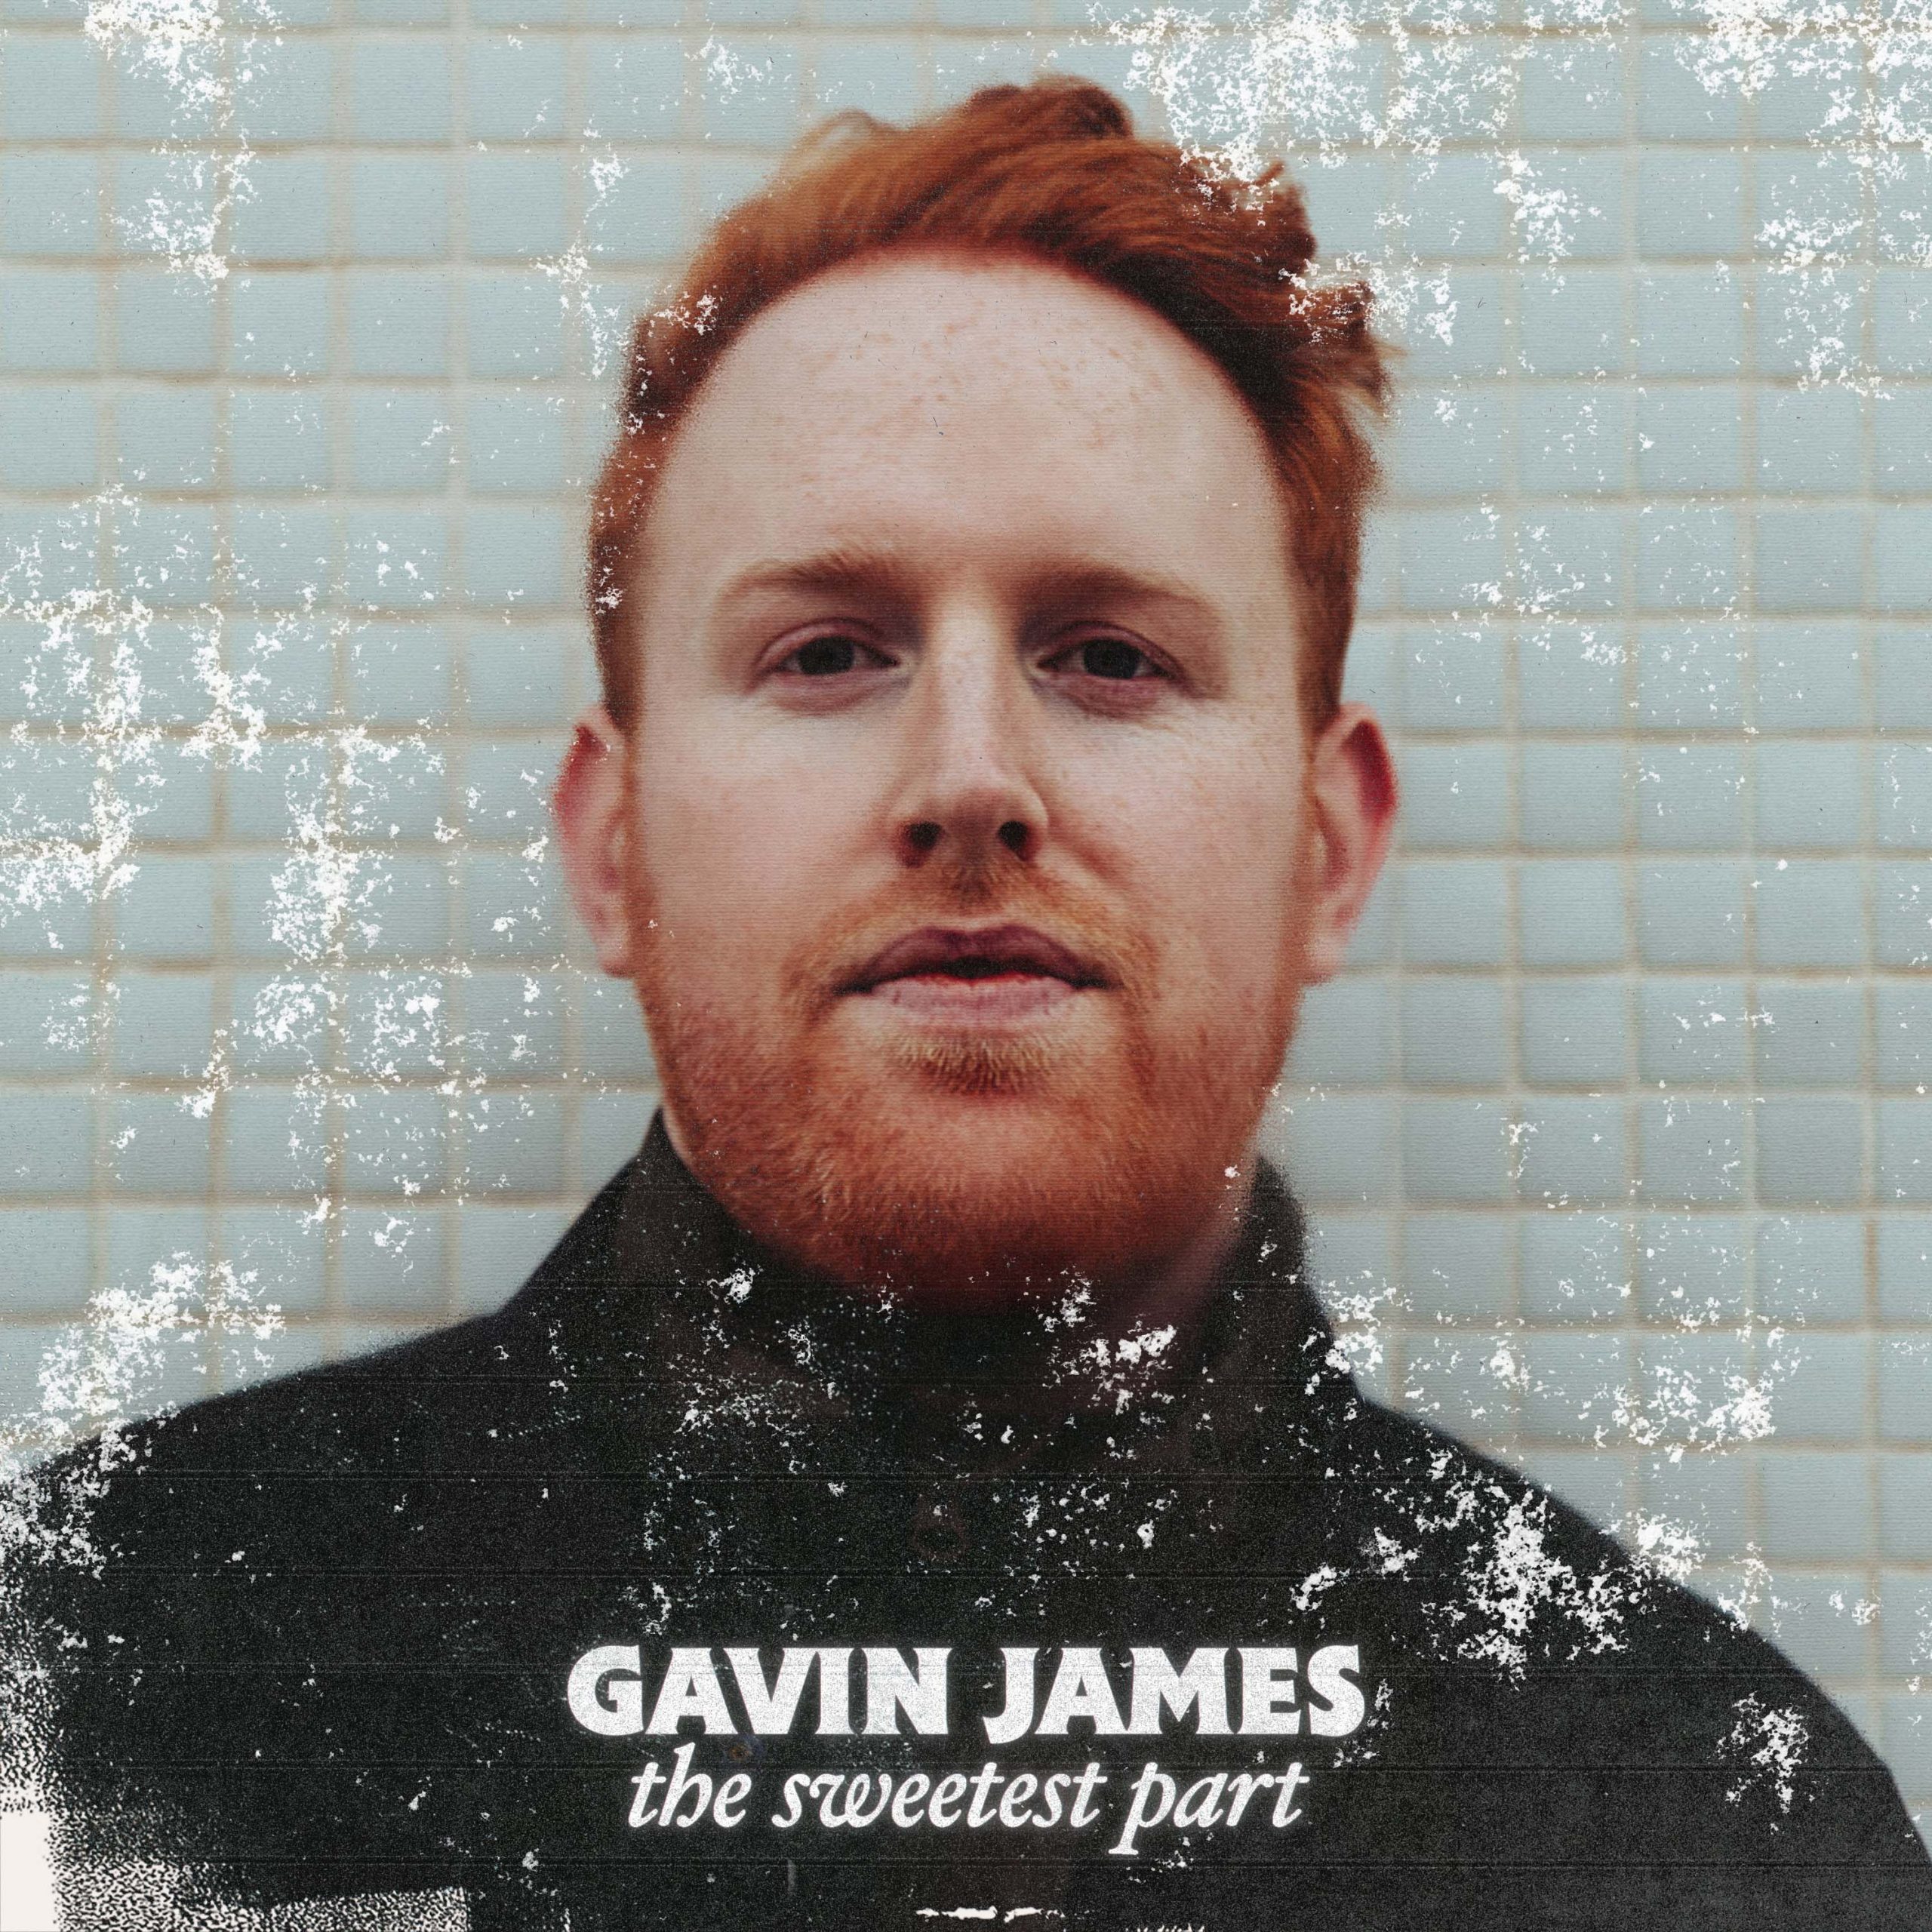 GAVIN JAMES ANNOUNCES HIS 3rd SOLO ALBUM ‘THE SWEETEST PART’.